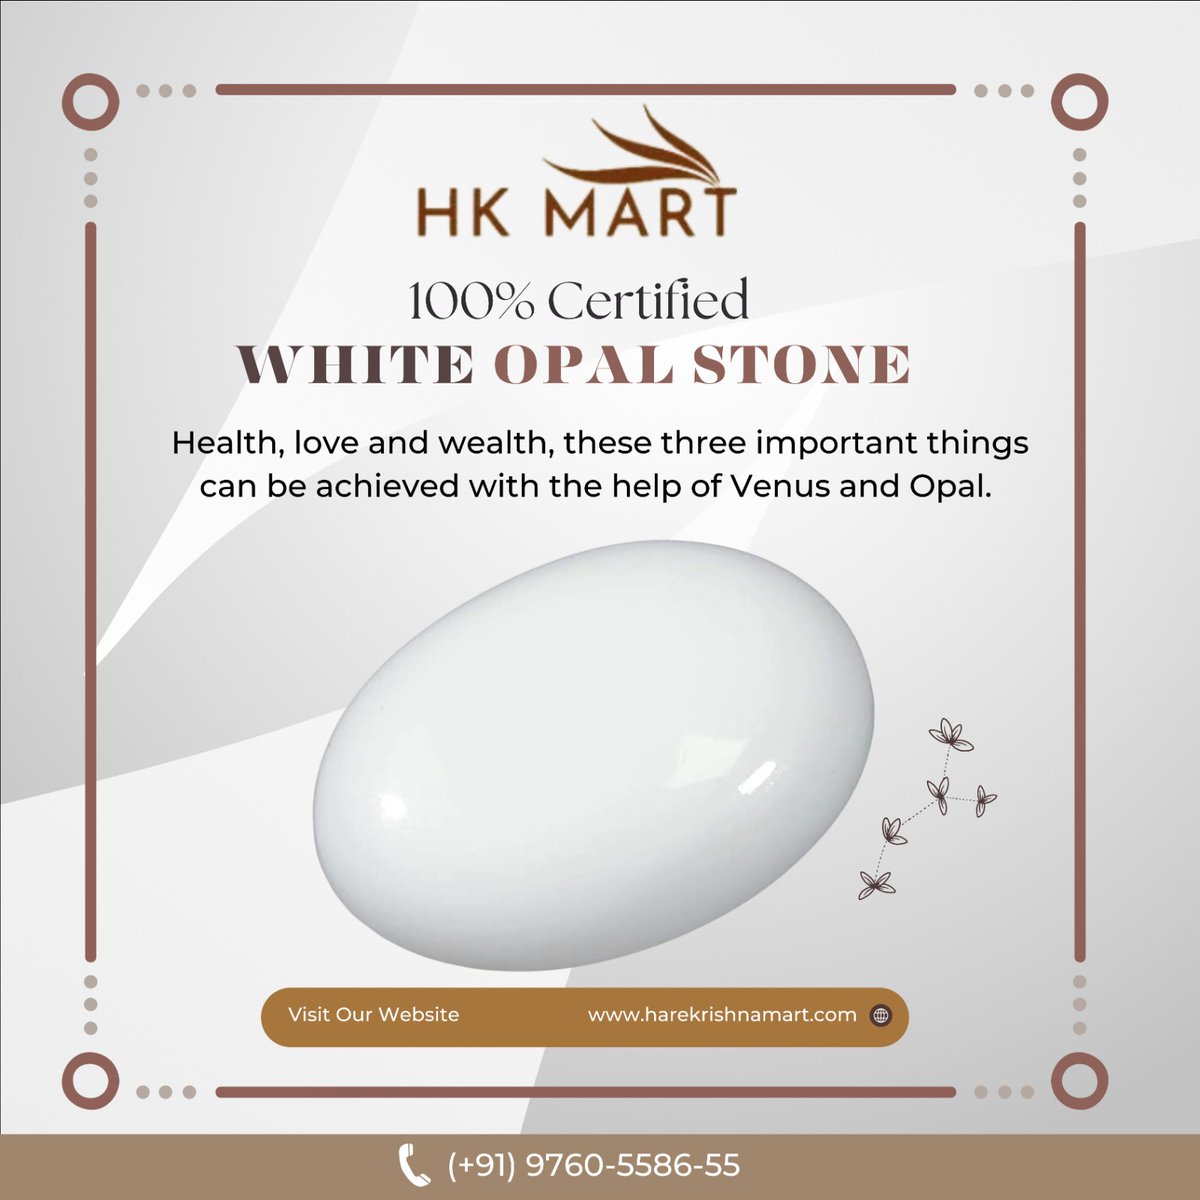 Buy now :-harekrishnamart.com/products/certi…

#opal #whiteopal